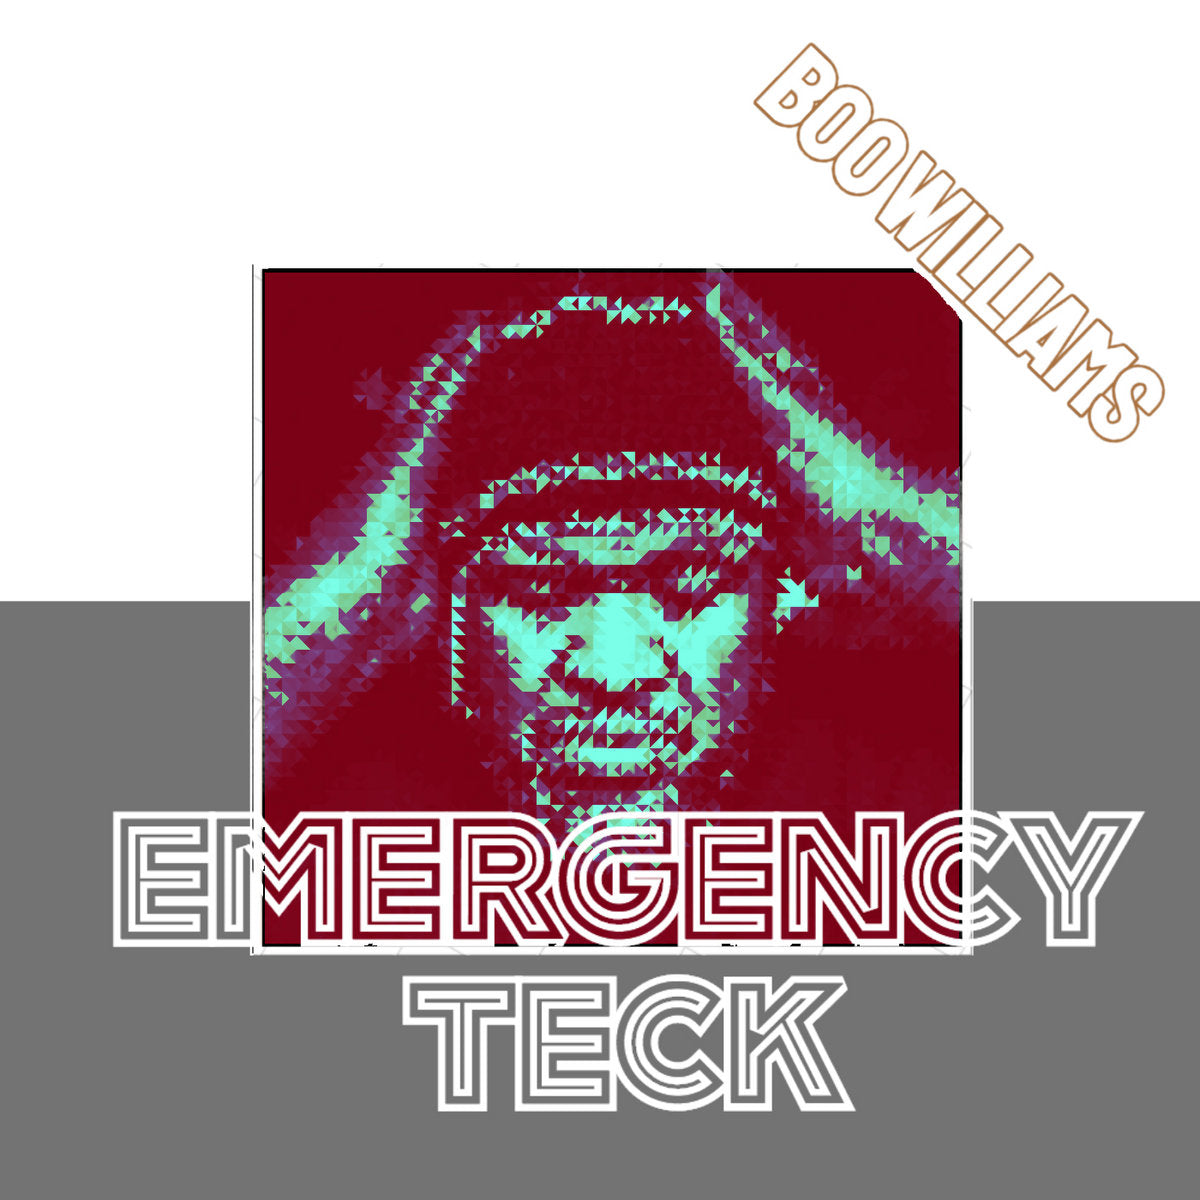 Boo Williams - Emergency Teck